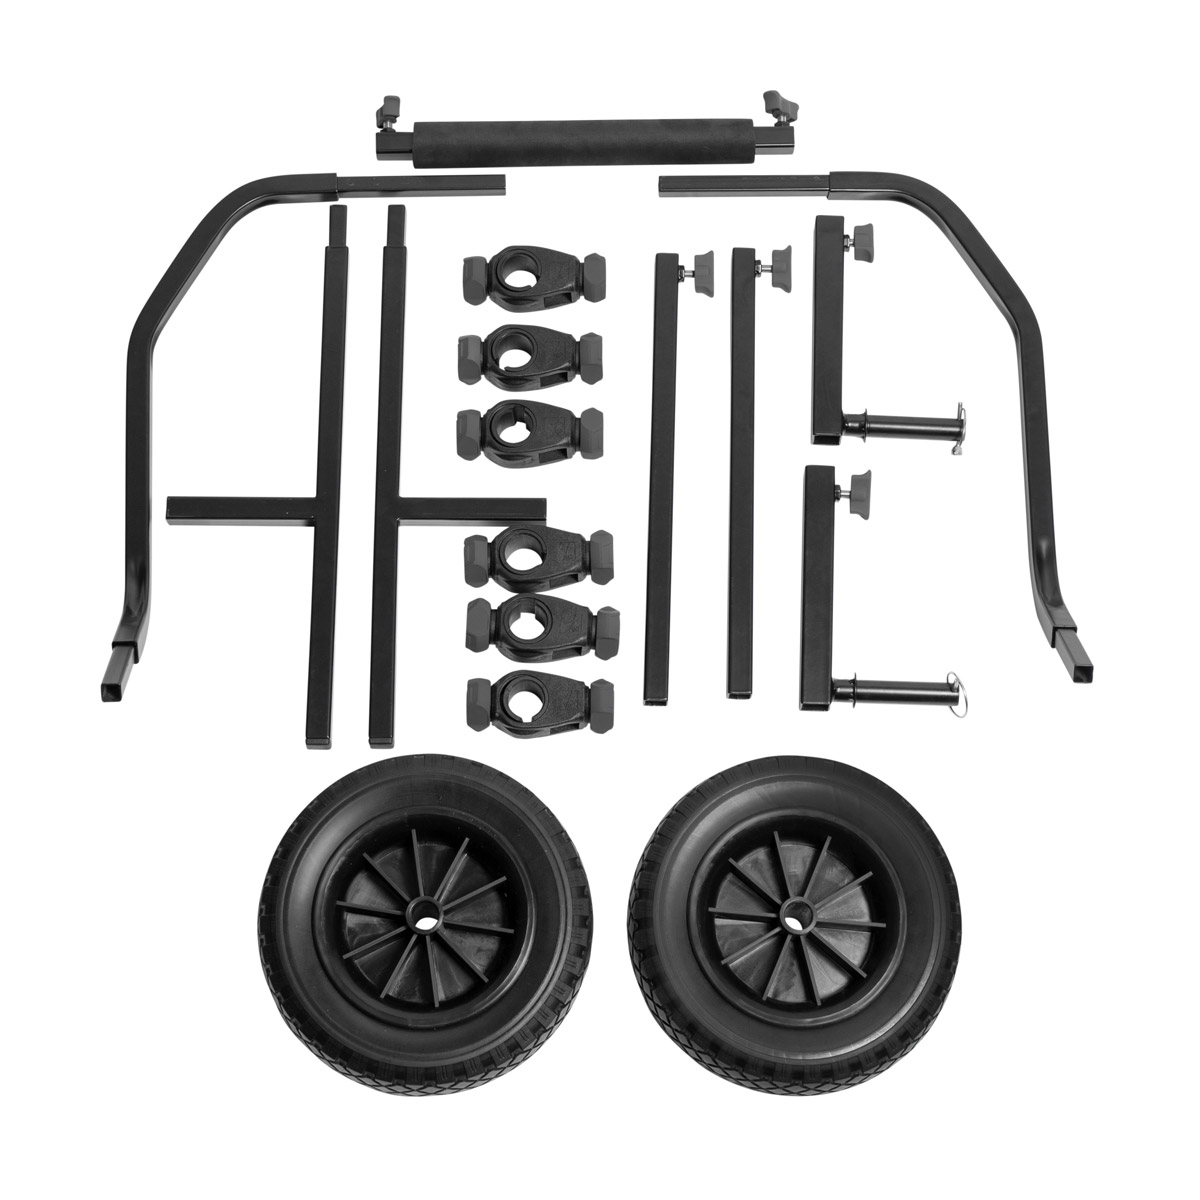 Preston Innovations Offbox Wheel Kit